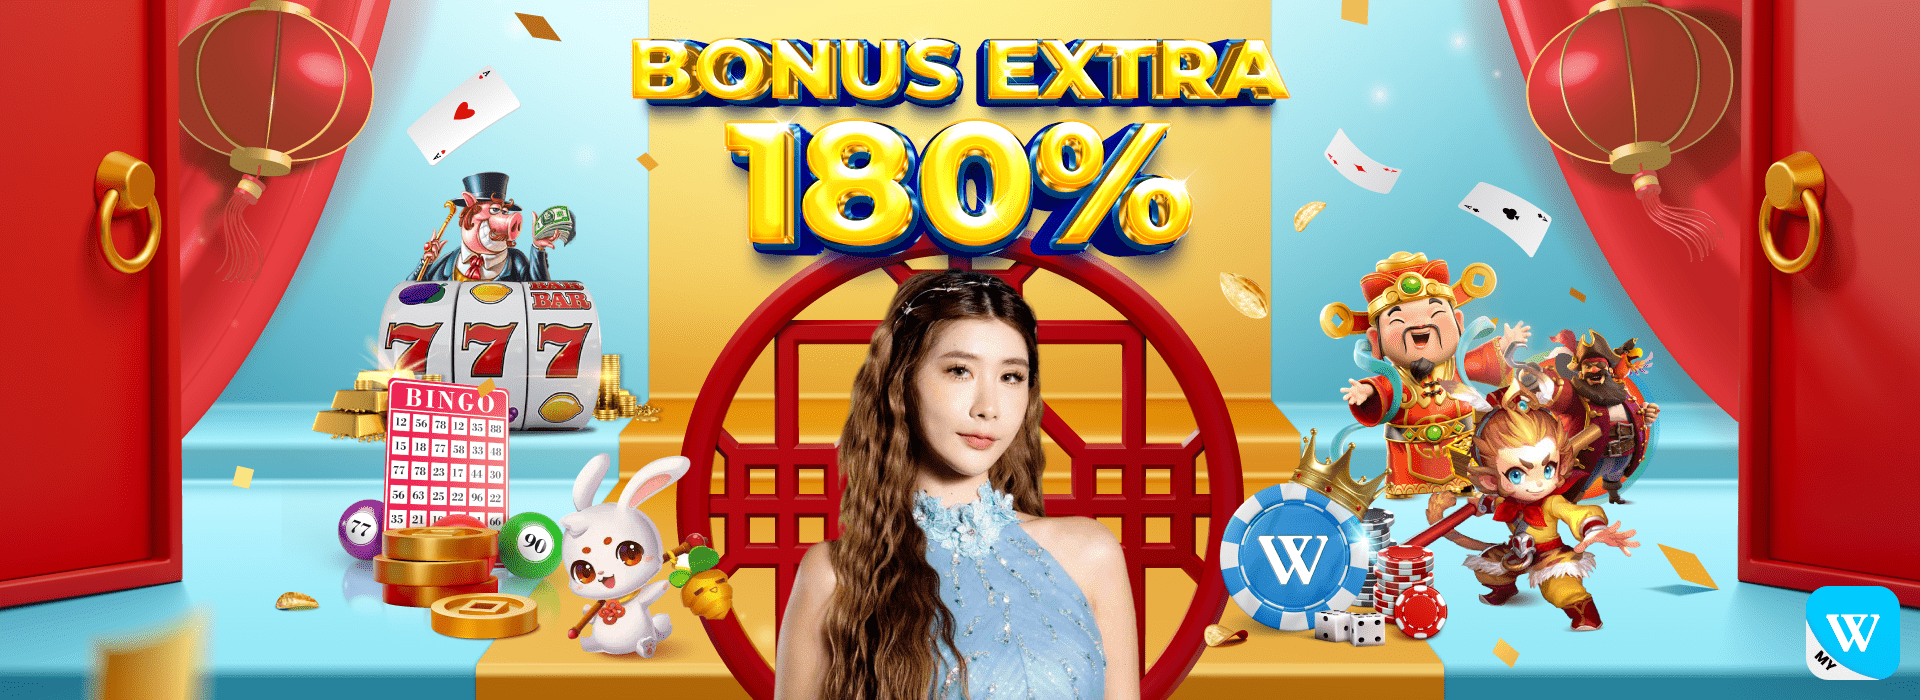 CNY-Banner-Bonus-Extra-180%